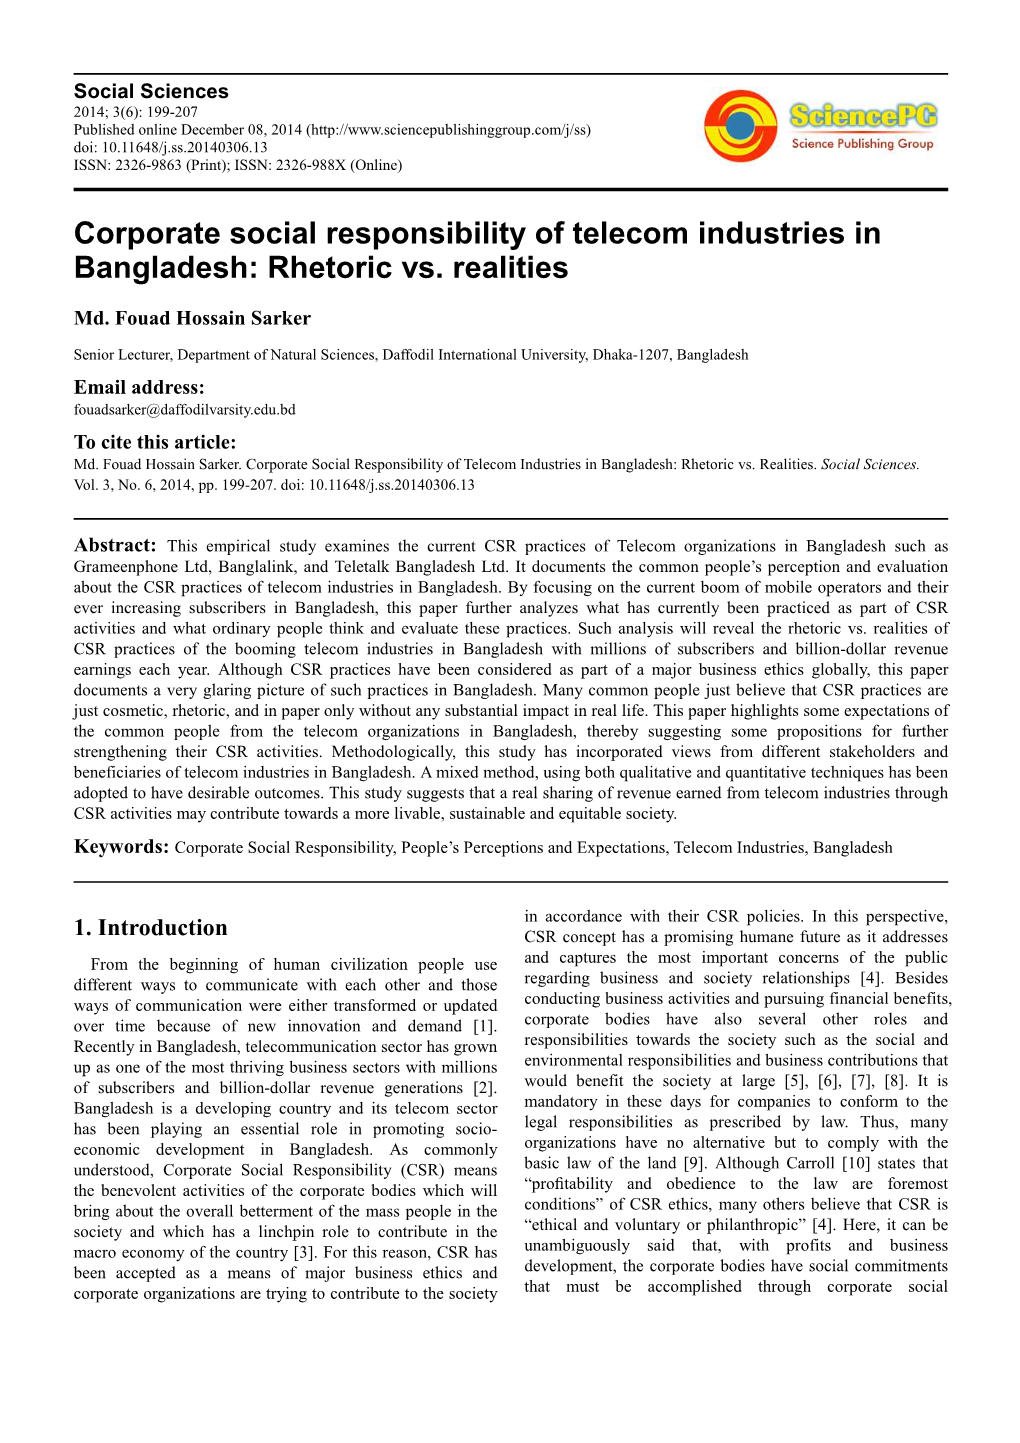 Corporate Social Responsibility of Telecom Industries in Bangladesh: Rhetoric Vs